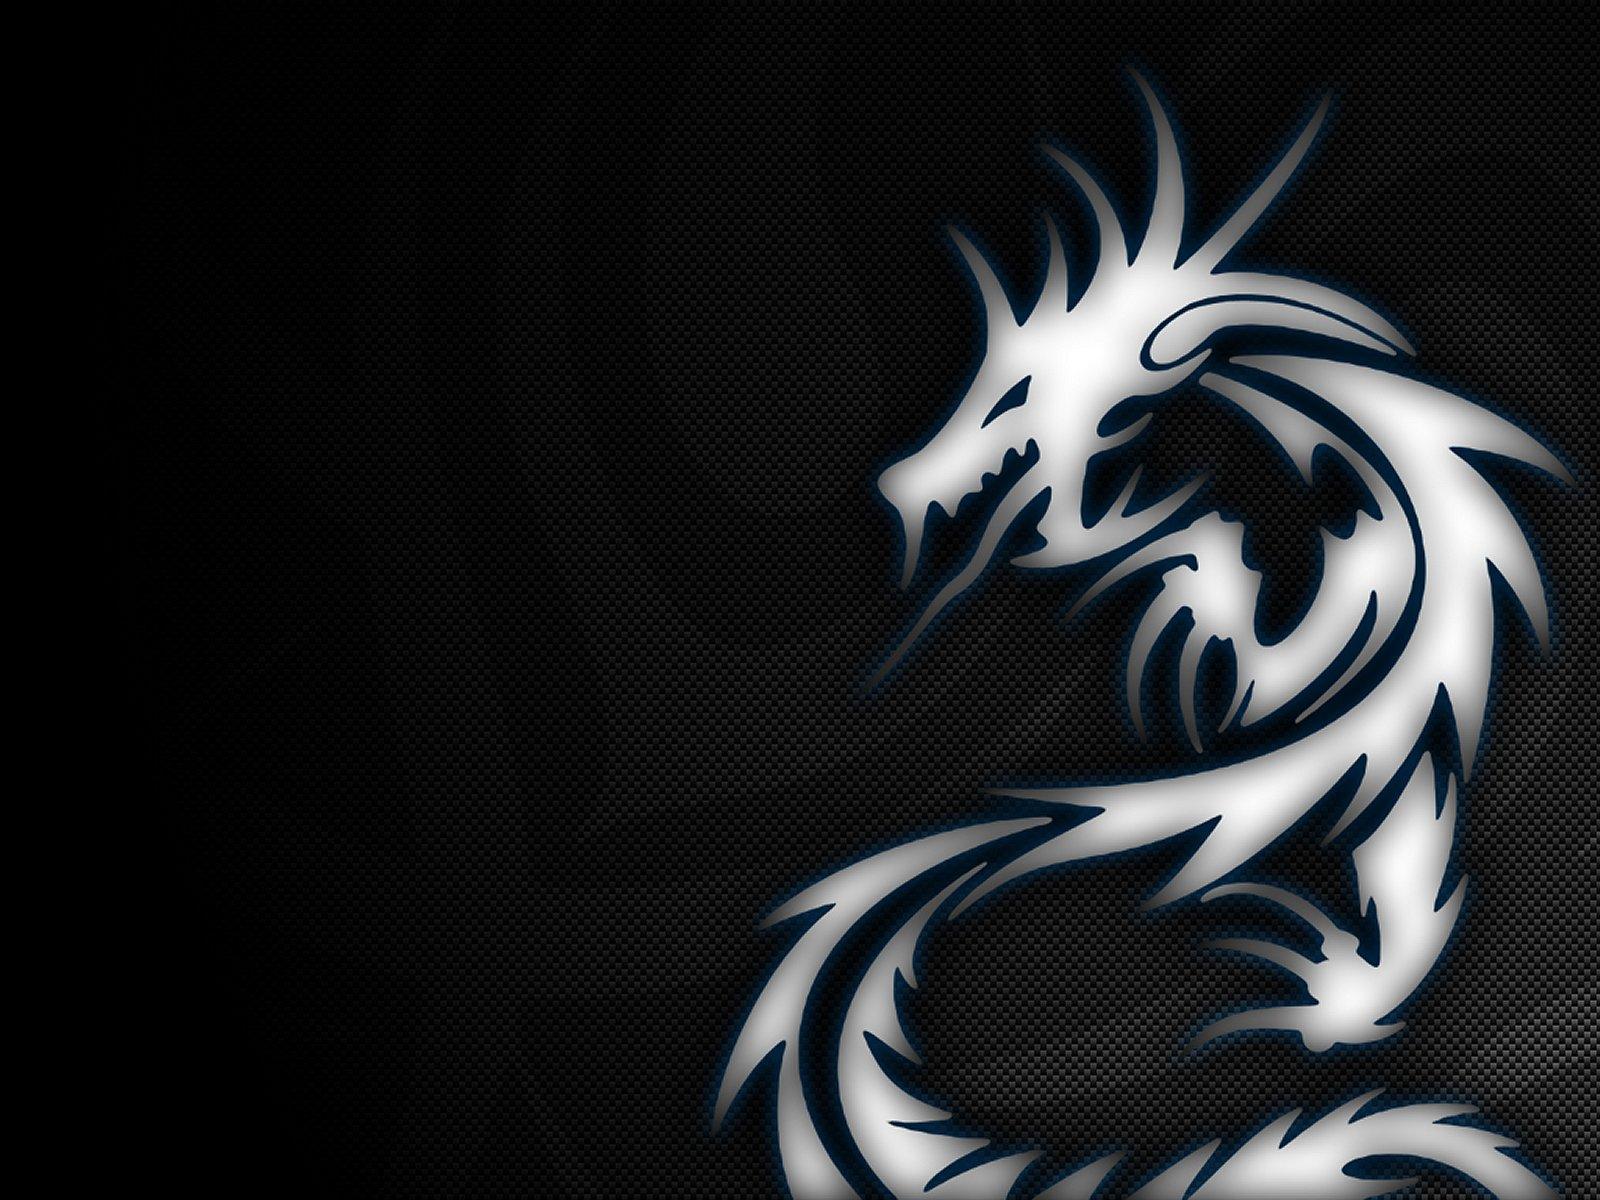 Cool Ice Dragon Logo - Cool Dragon HD Wallpaper Backgrounds Free Download | PixelsTalk.Net